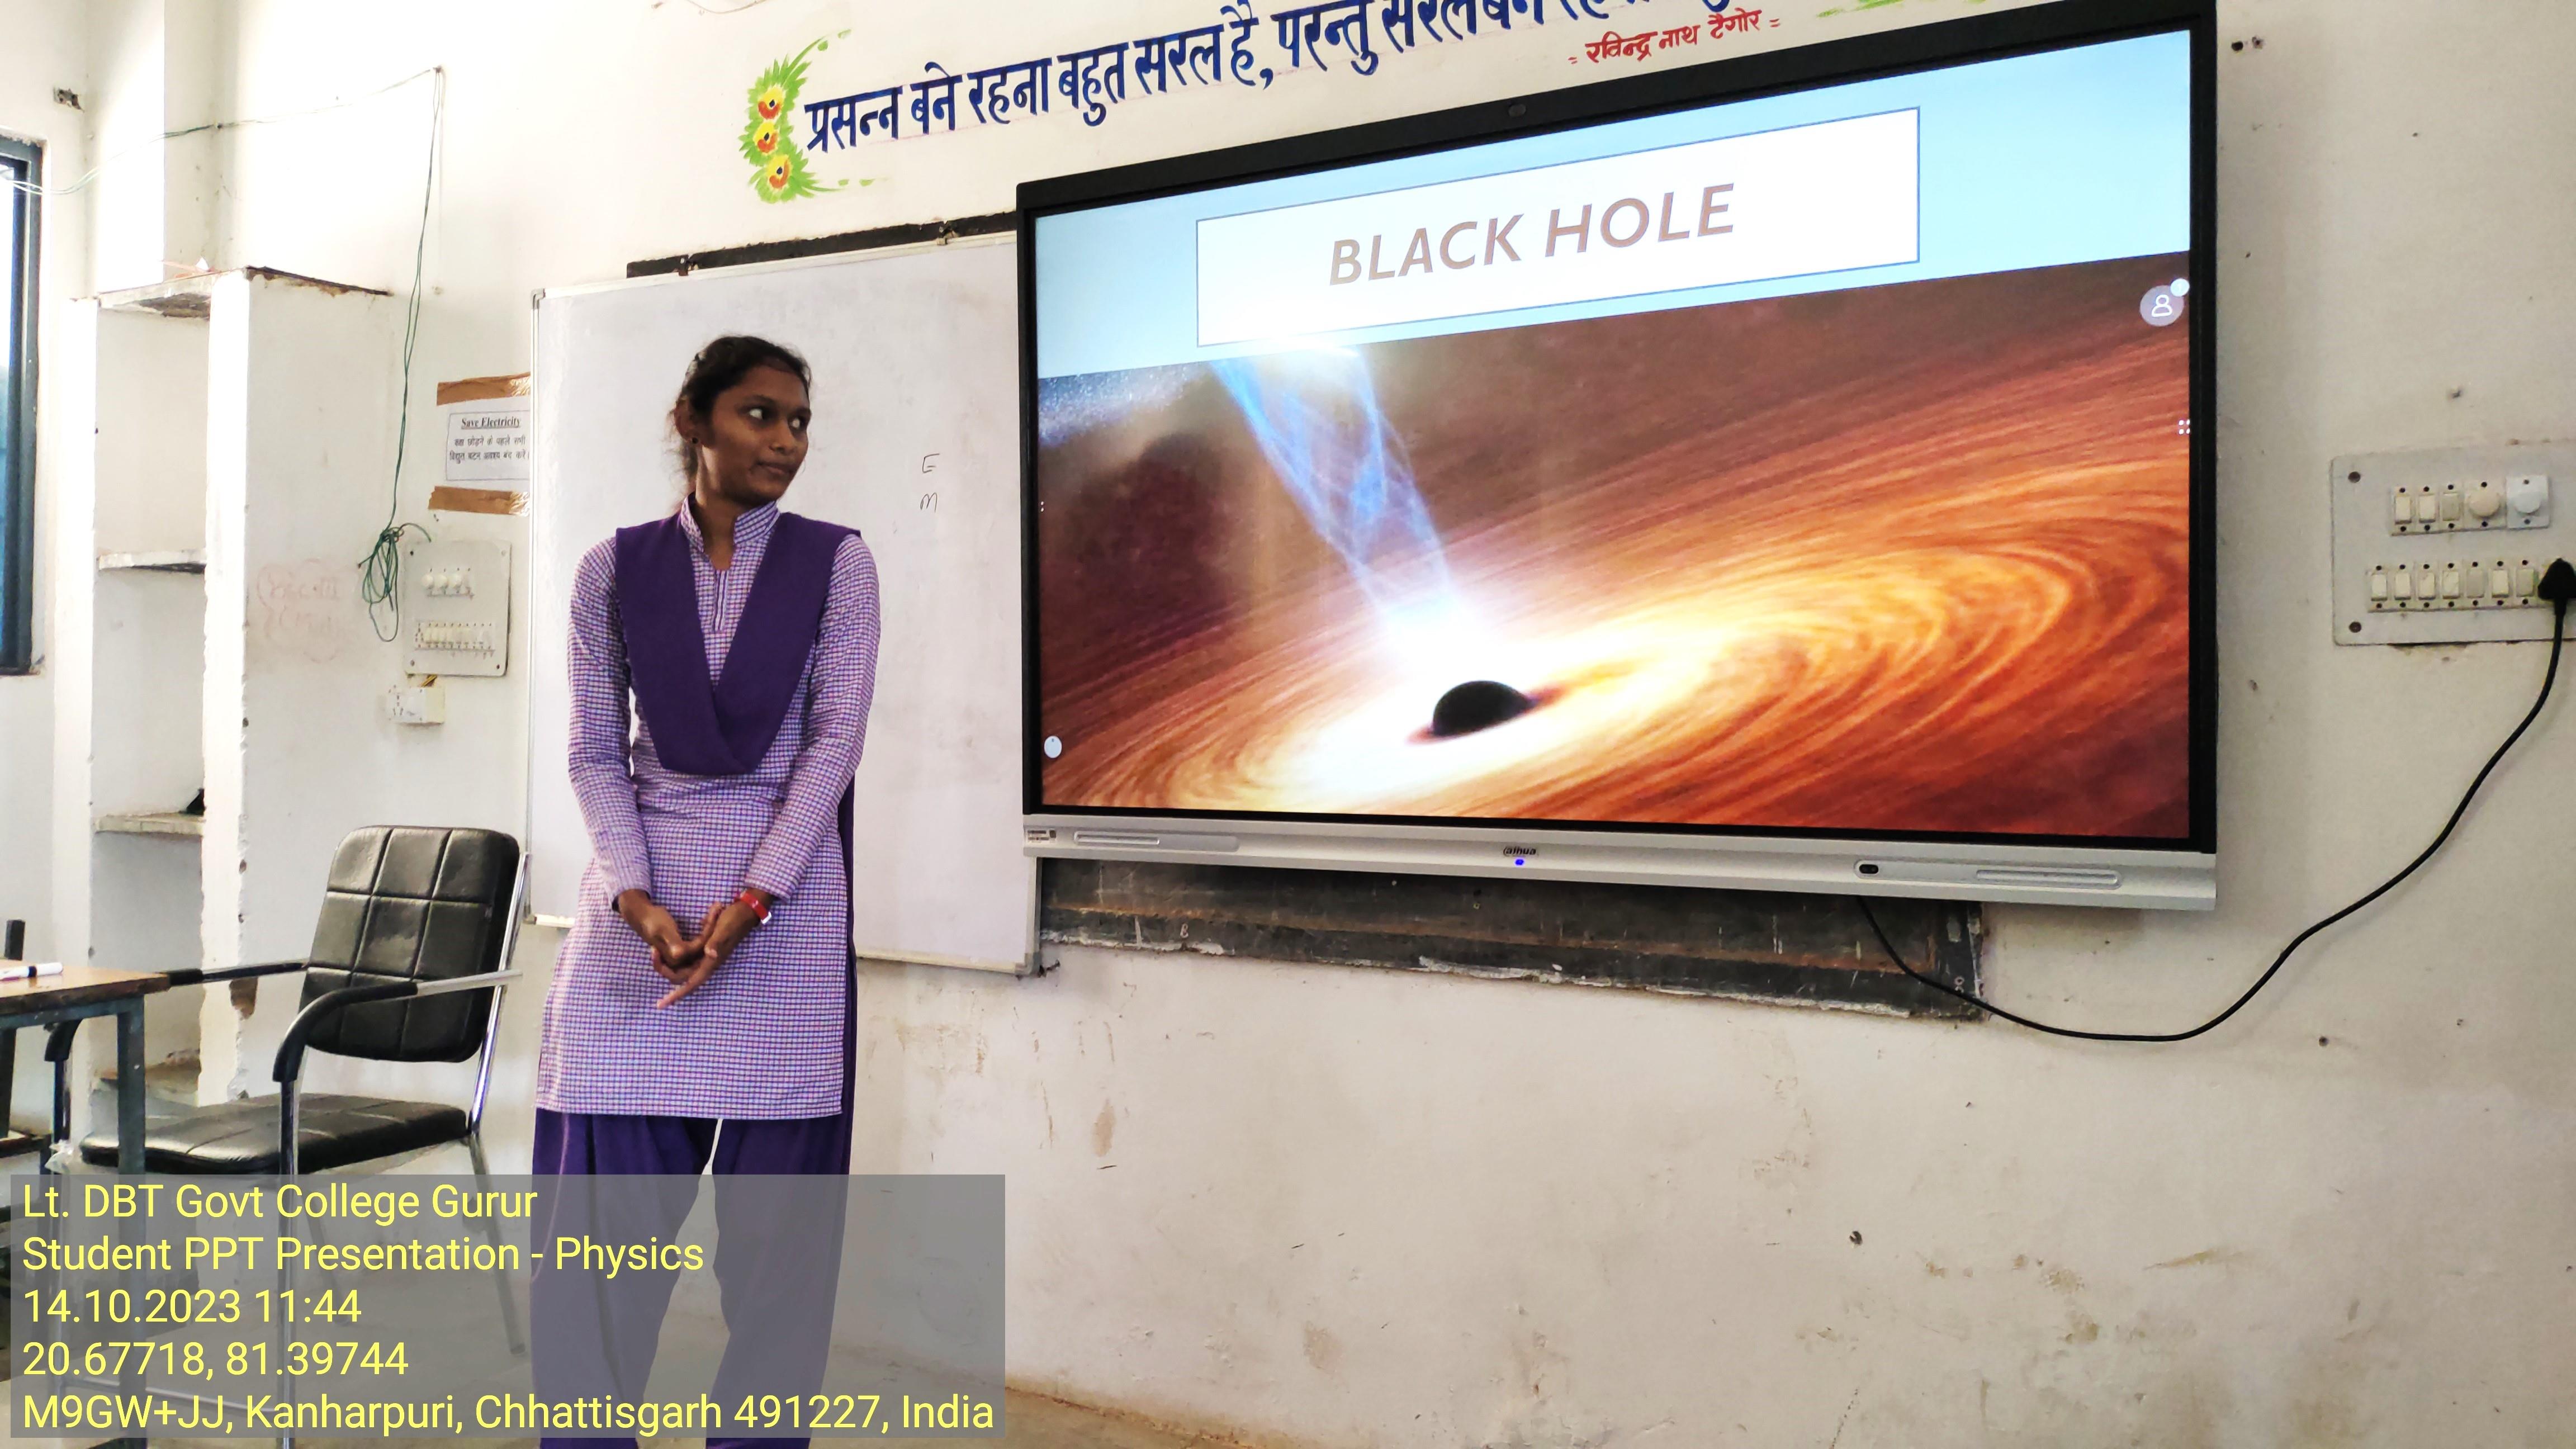 Student PPT Presentation (Physics) - Photo Govt. college Gurur